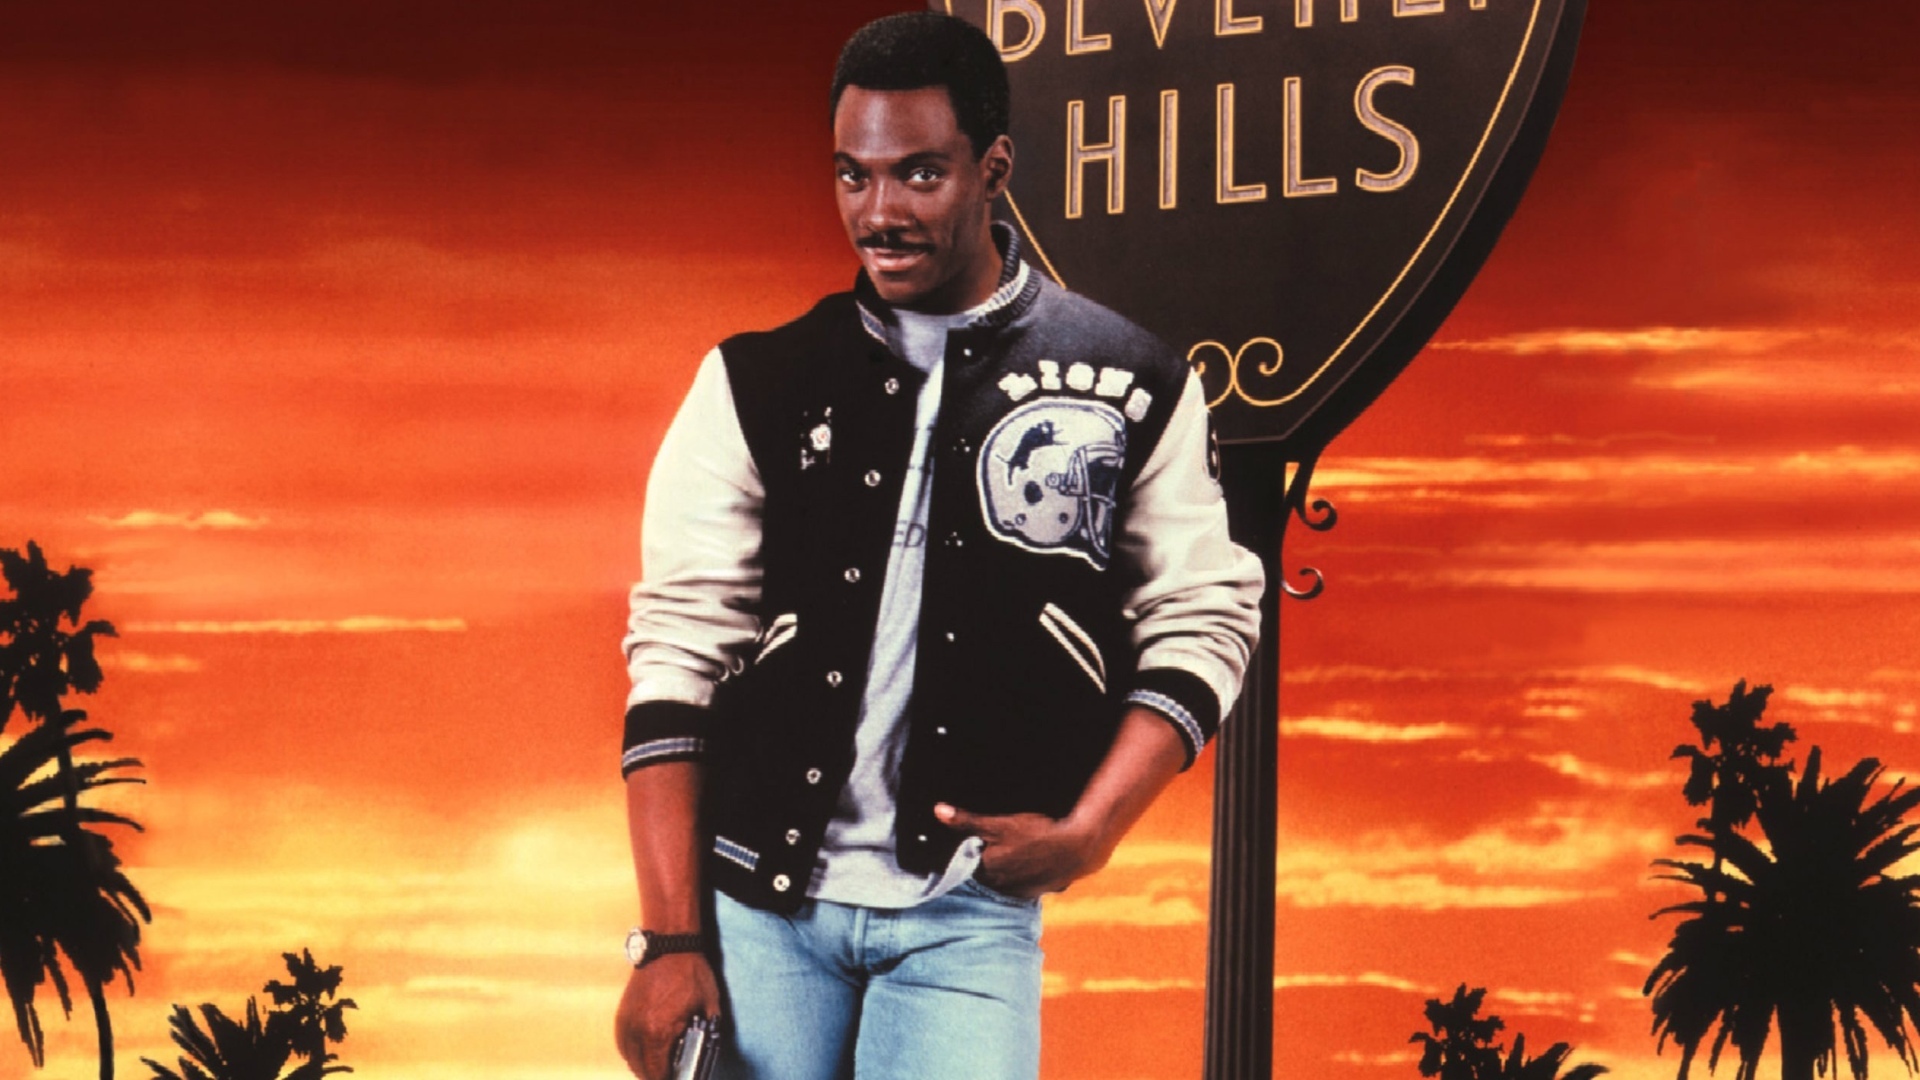 Popular Beverly Hills Cop Phone background